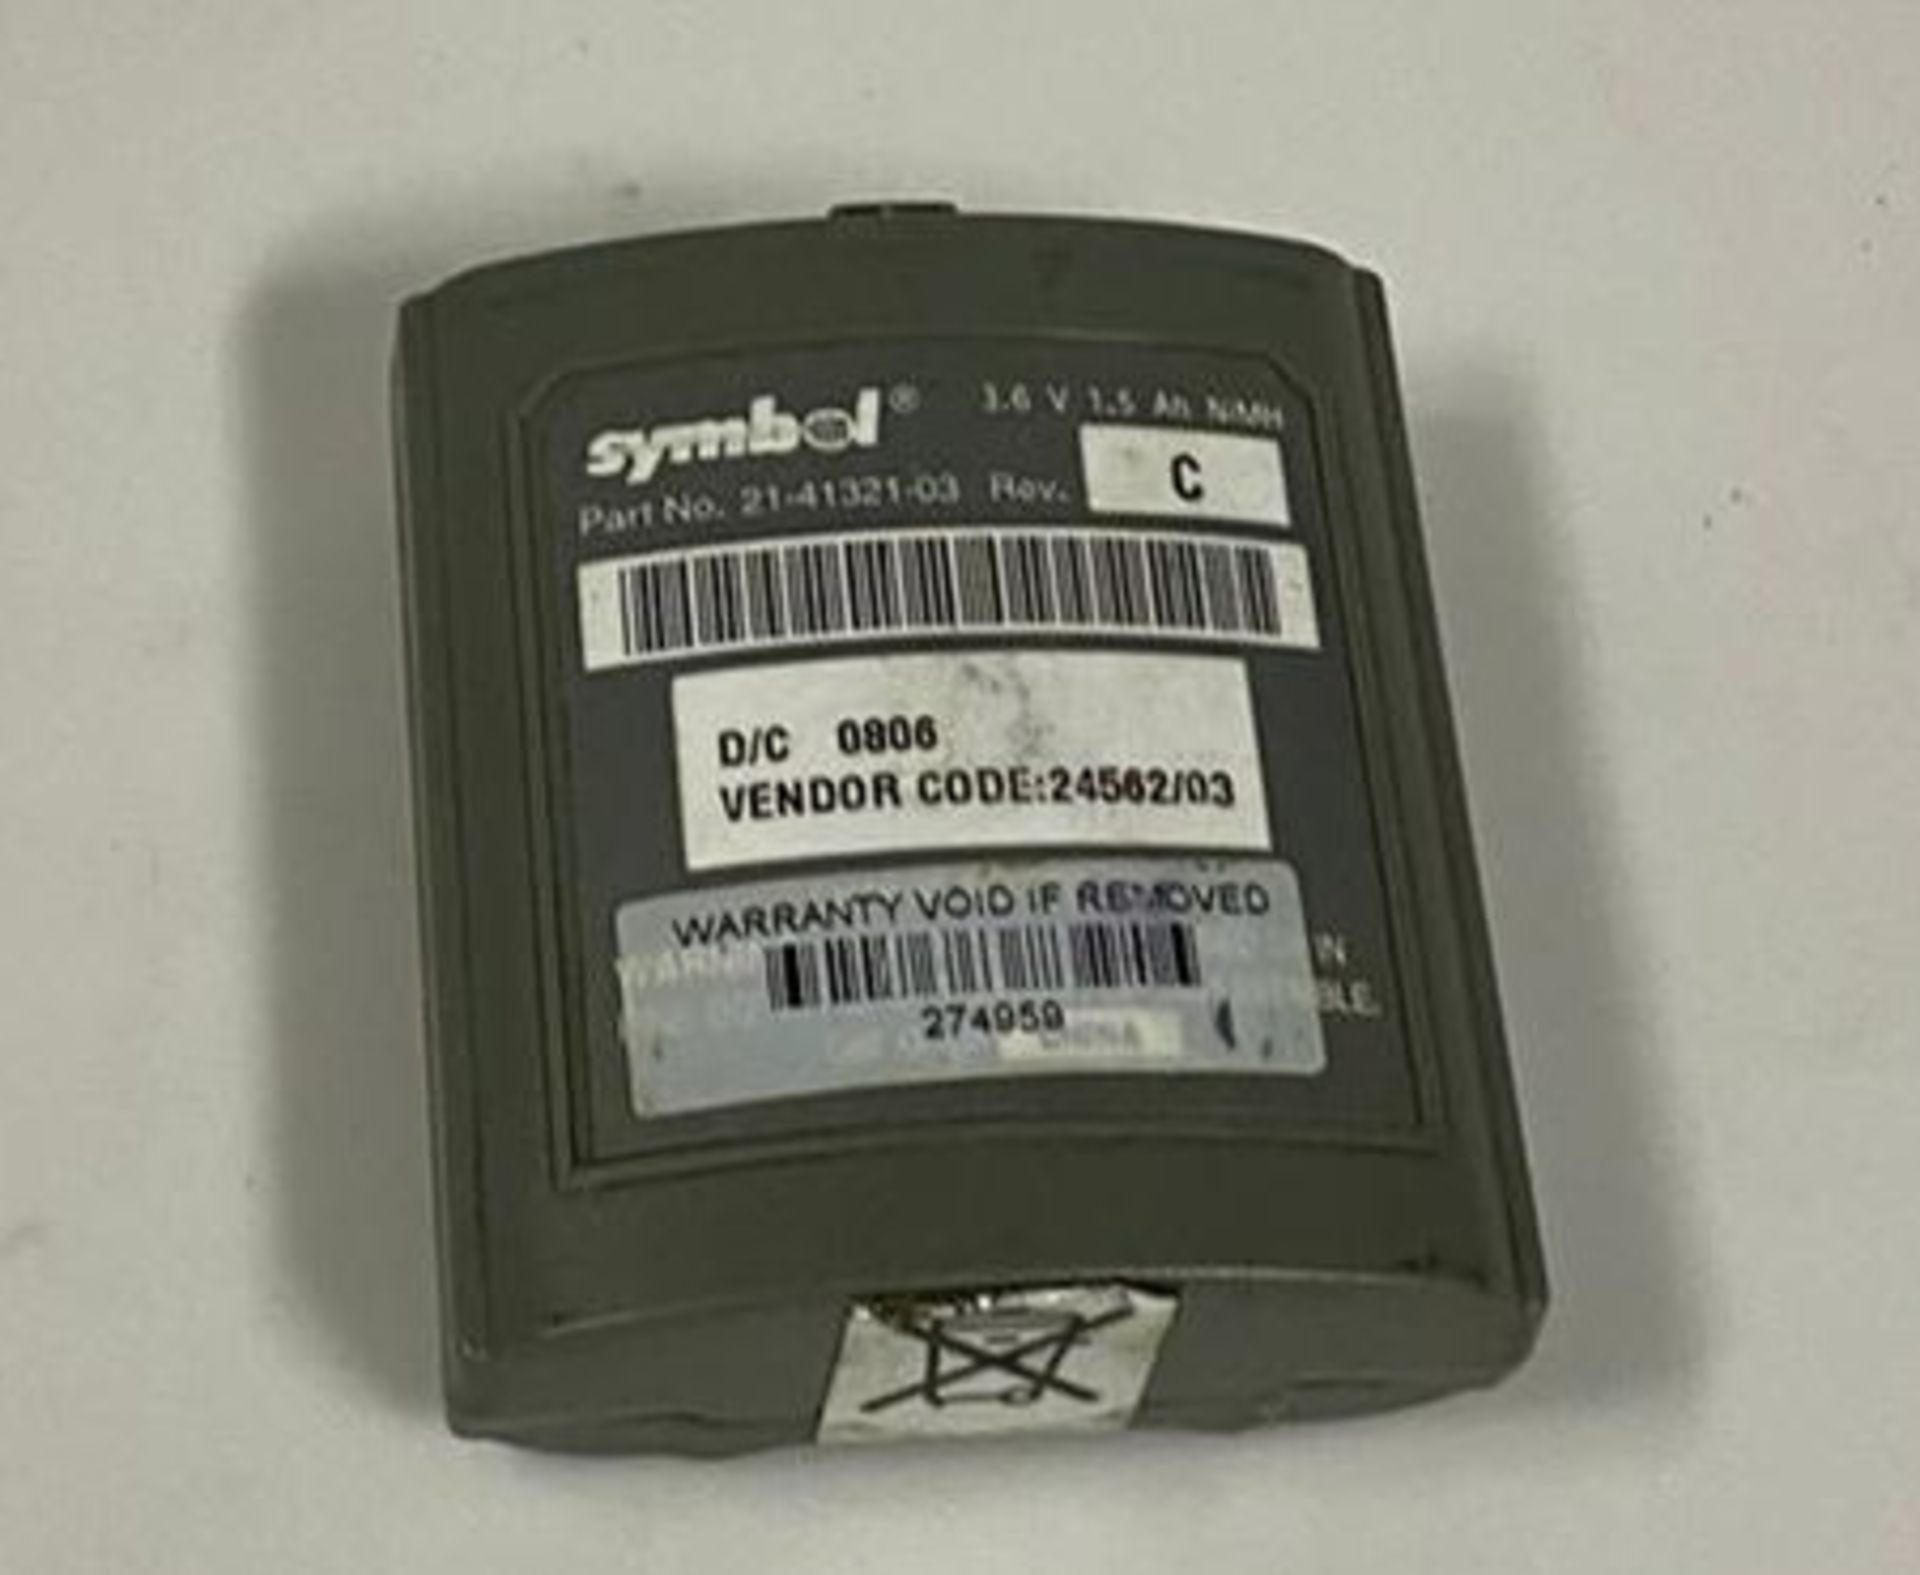 20 x Symbol Battery 21-4321-03 - Used Condition - Location: Altrincham WA14 - - Image 2 of 4